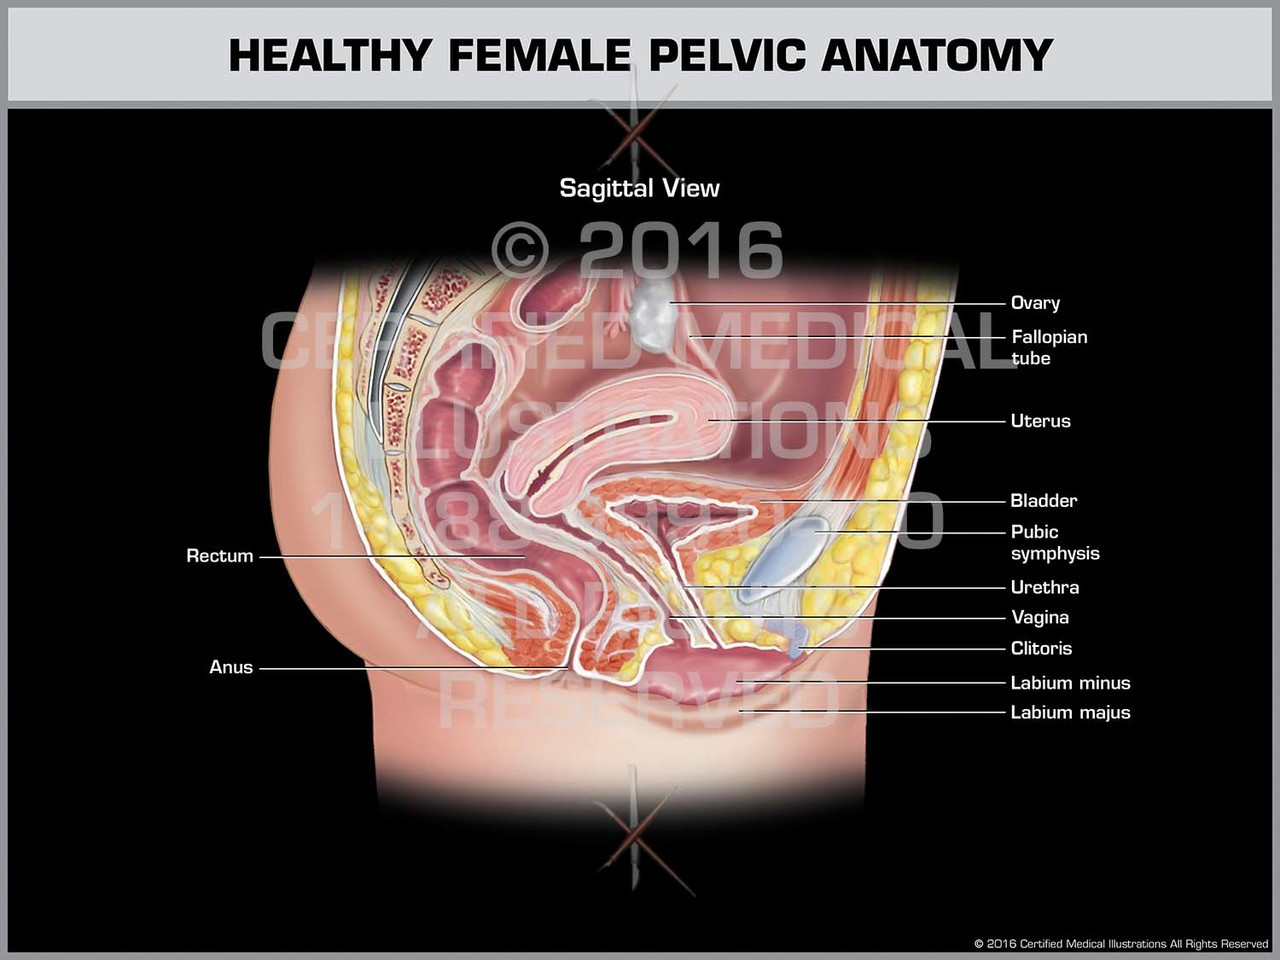 Healthy Female Pelvic Anatomy